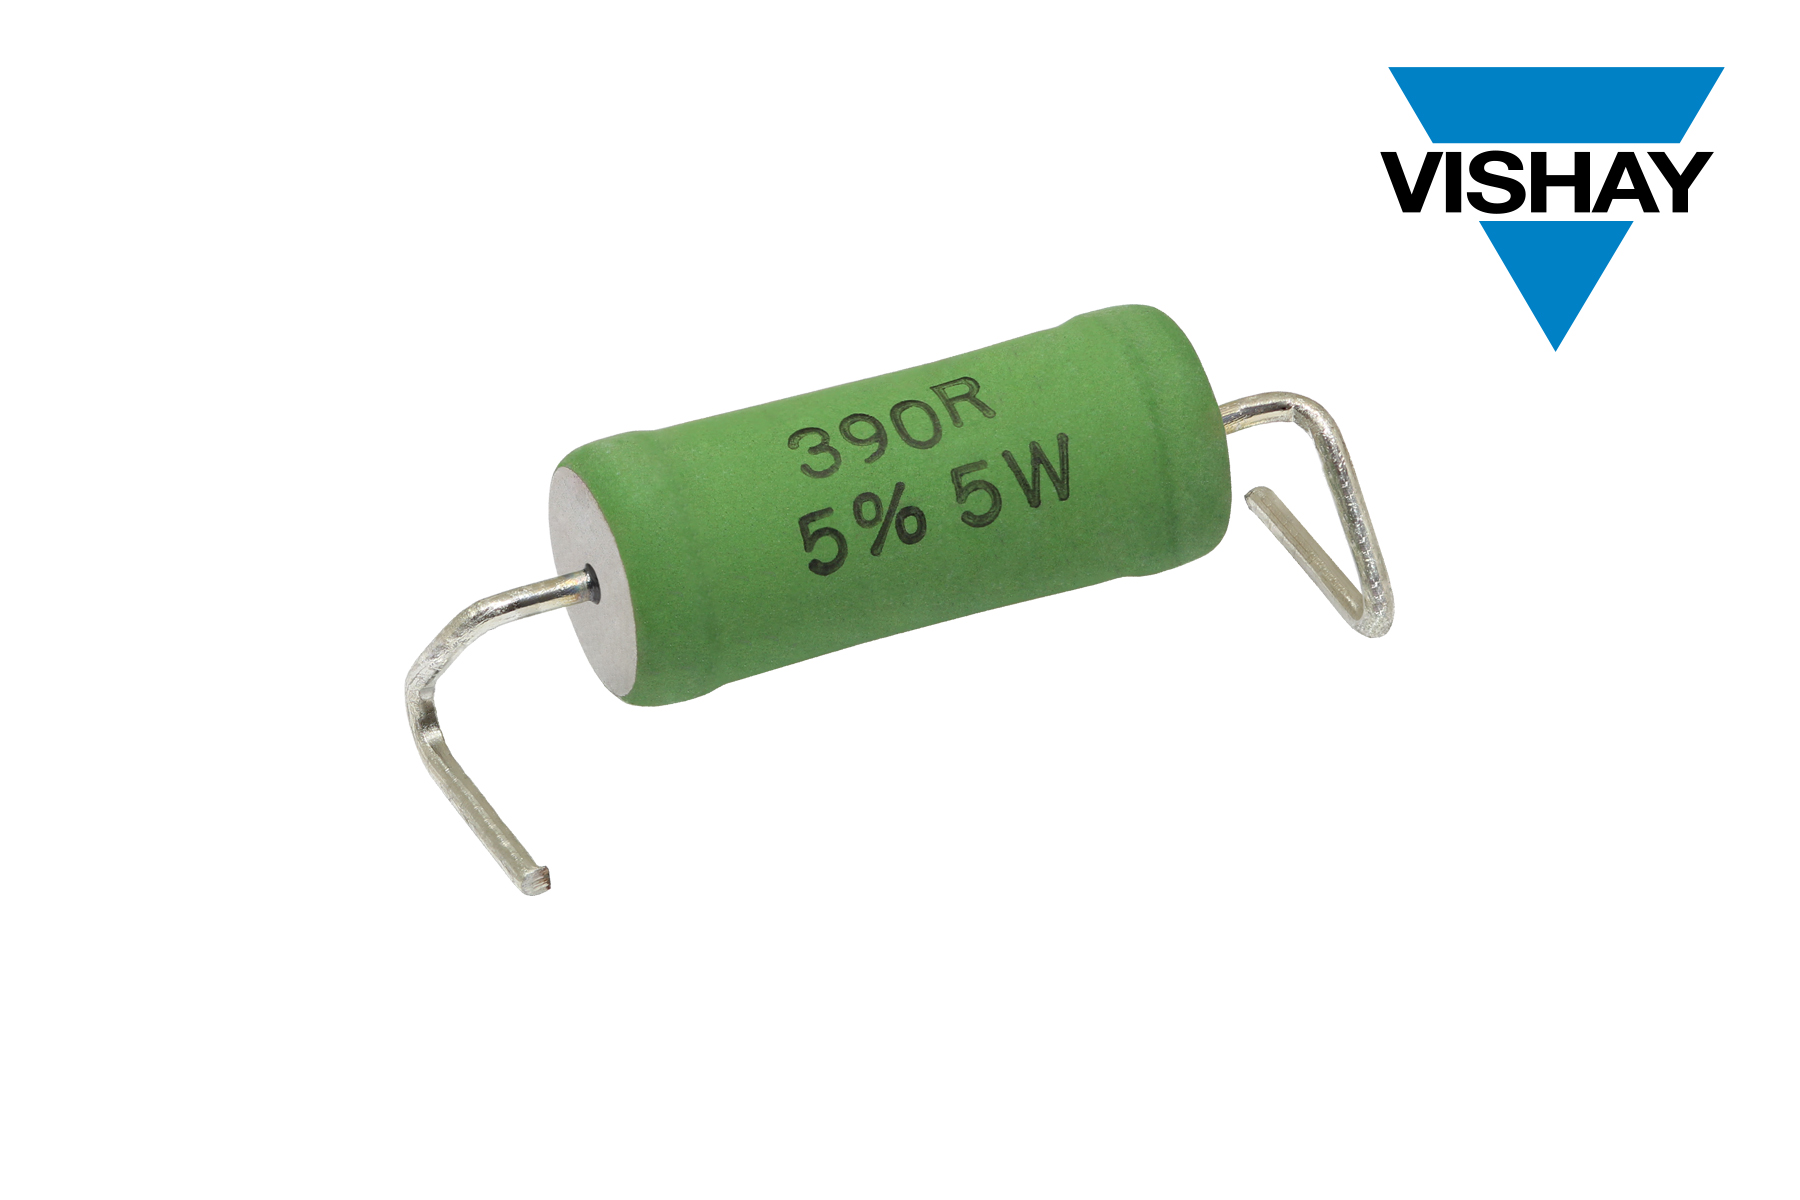 Vishay AC和AC-AT 5 W轴向水泥绕线电阻新增器件具有出色的抗脉冲性能